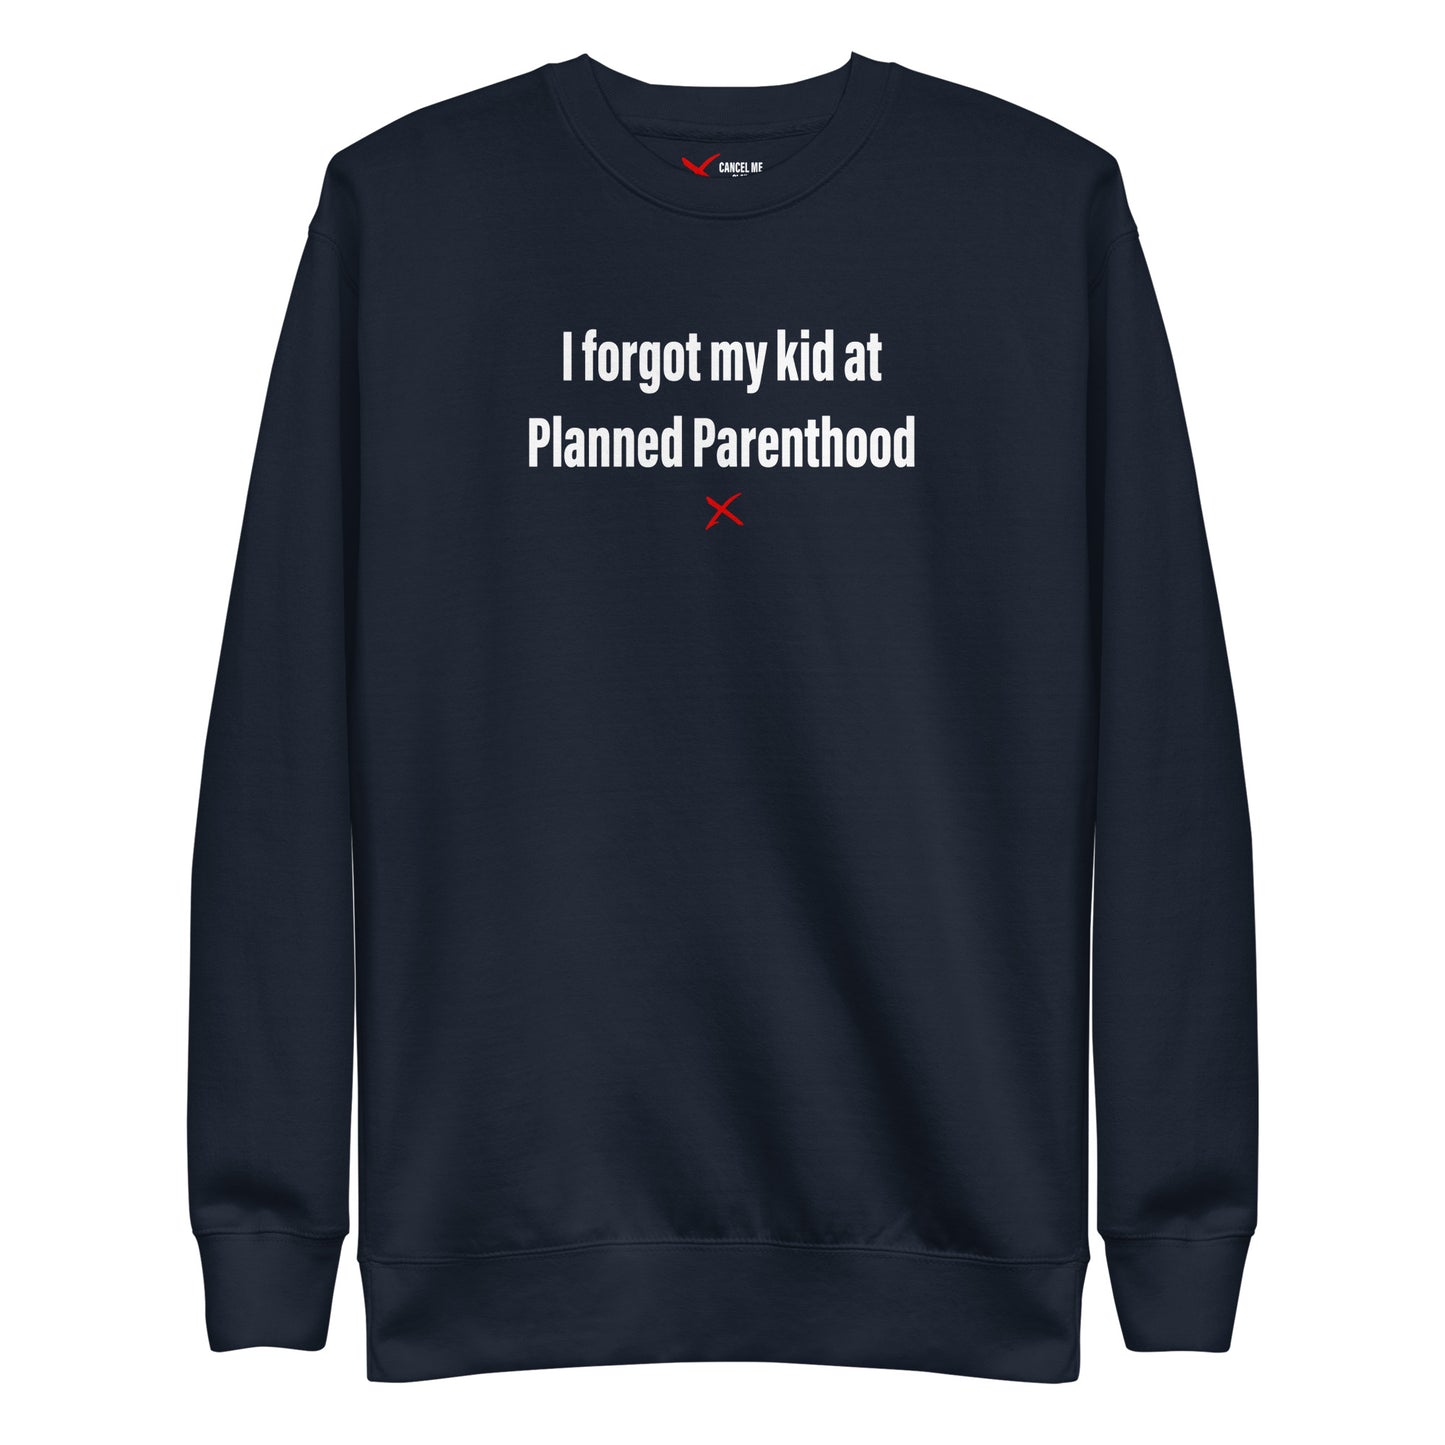 I forgot my kid at Planned Parenthood - Sweatshirt